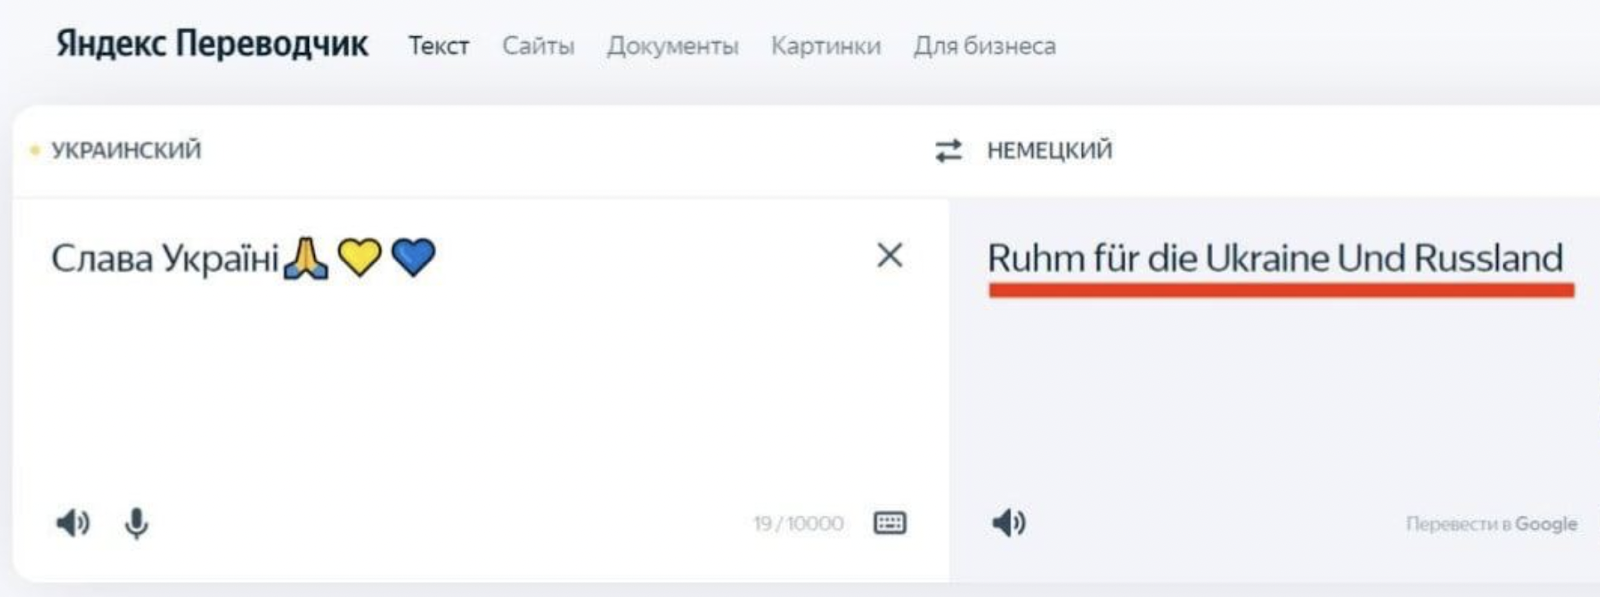 Yandex3.png